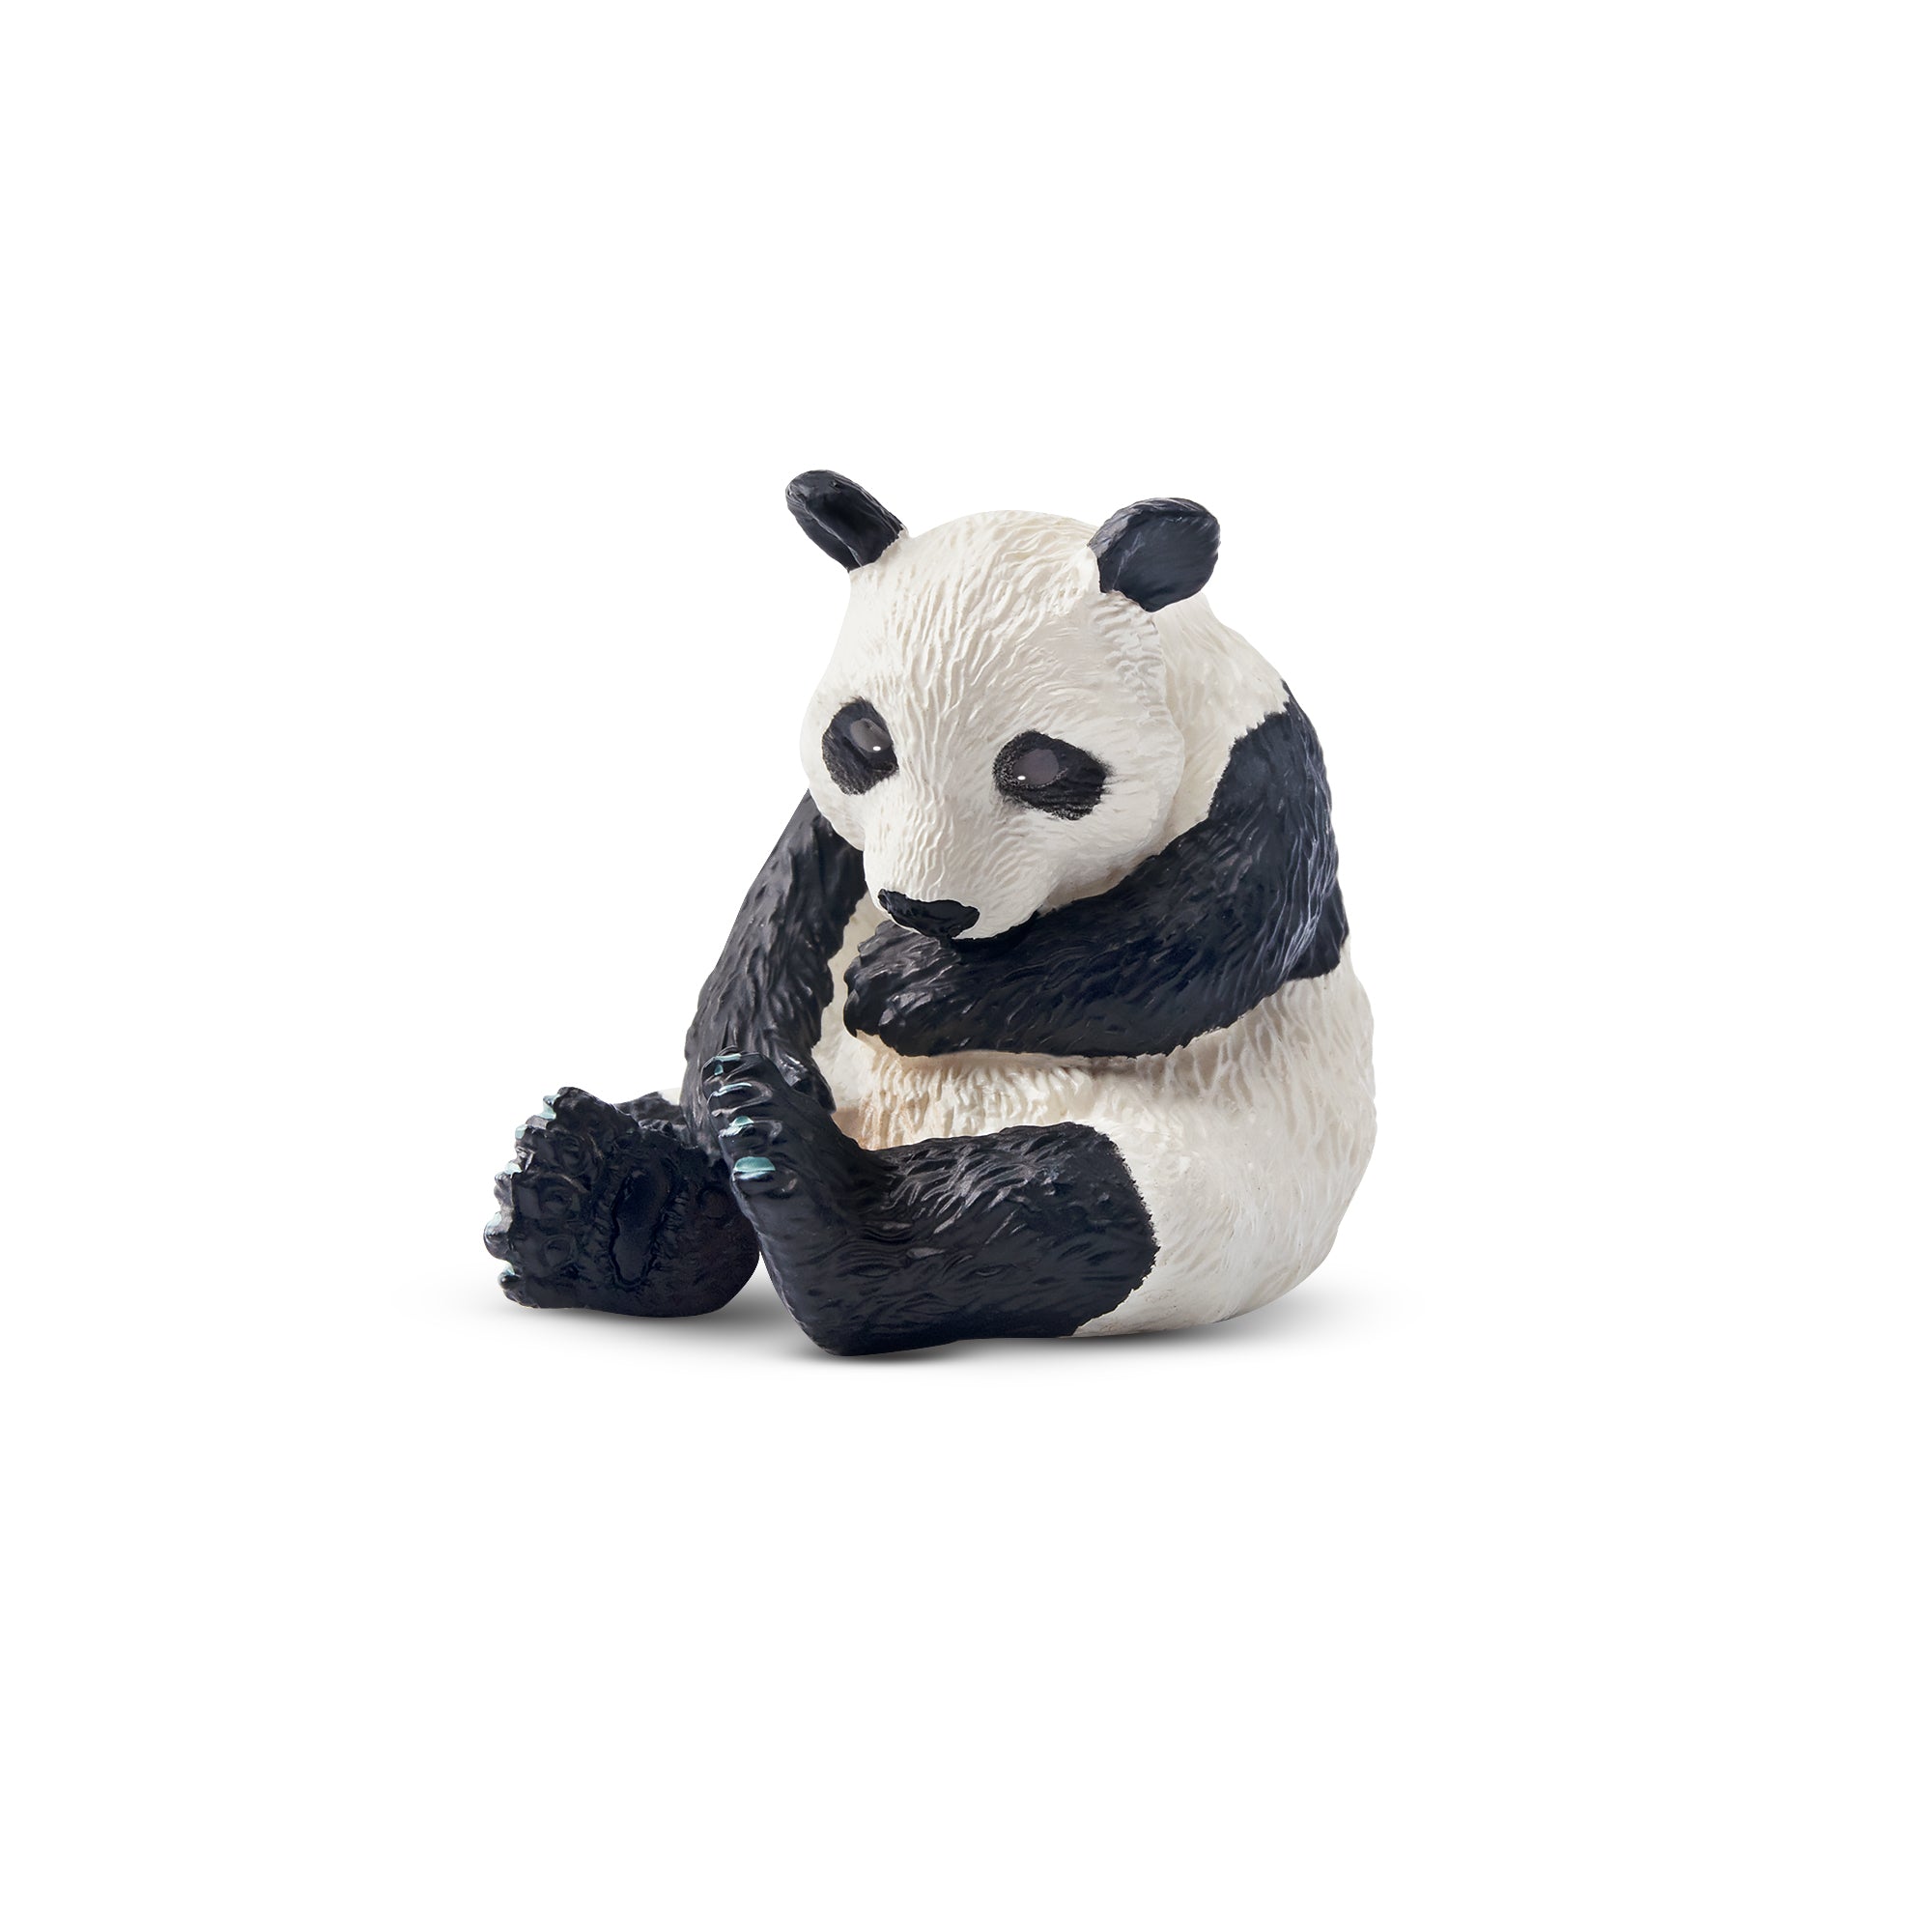 Toymany Napping Panda Cub Figurine Toy